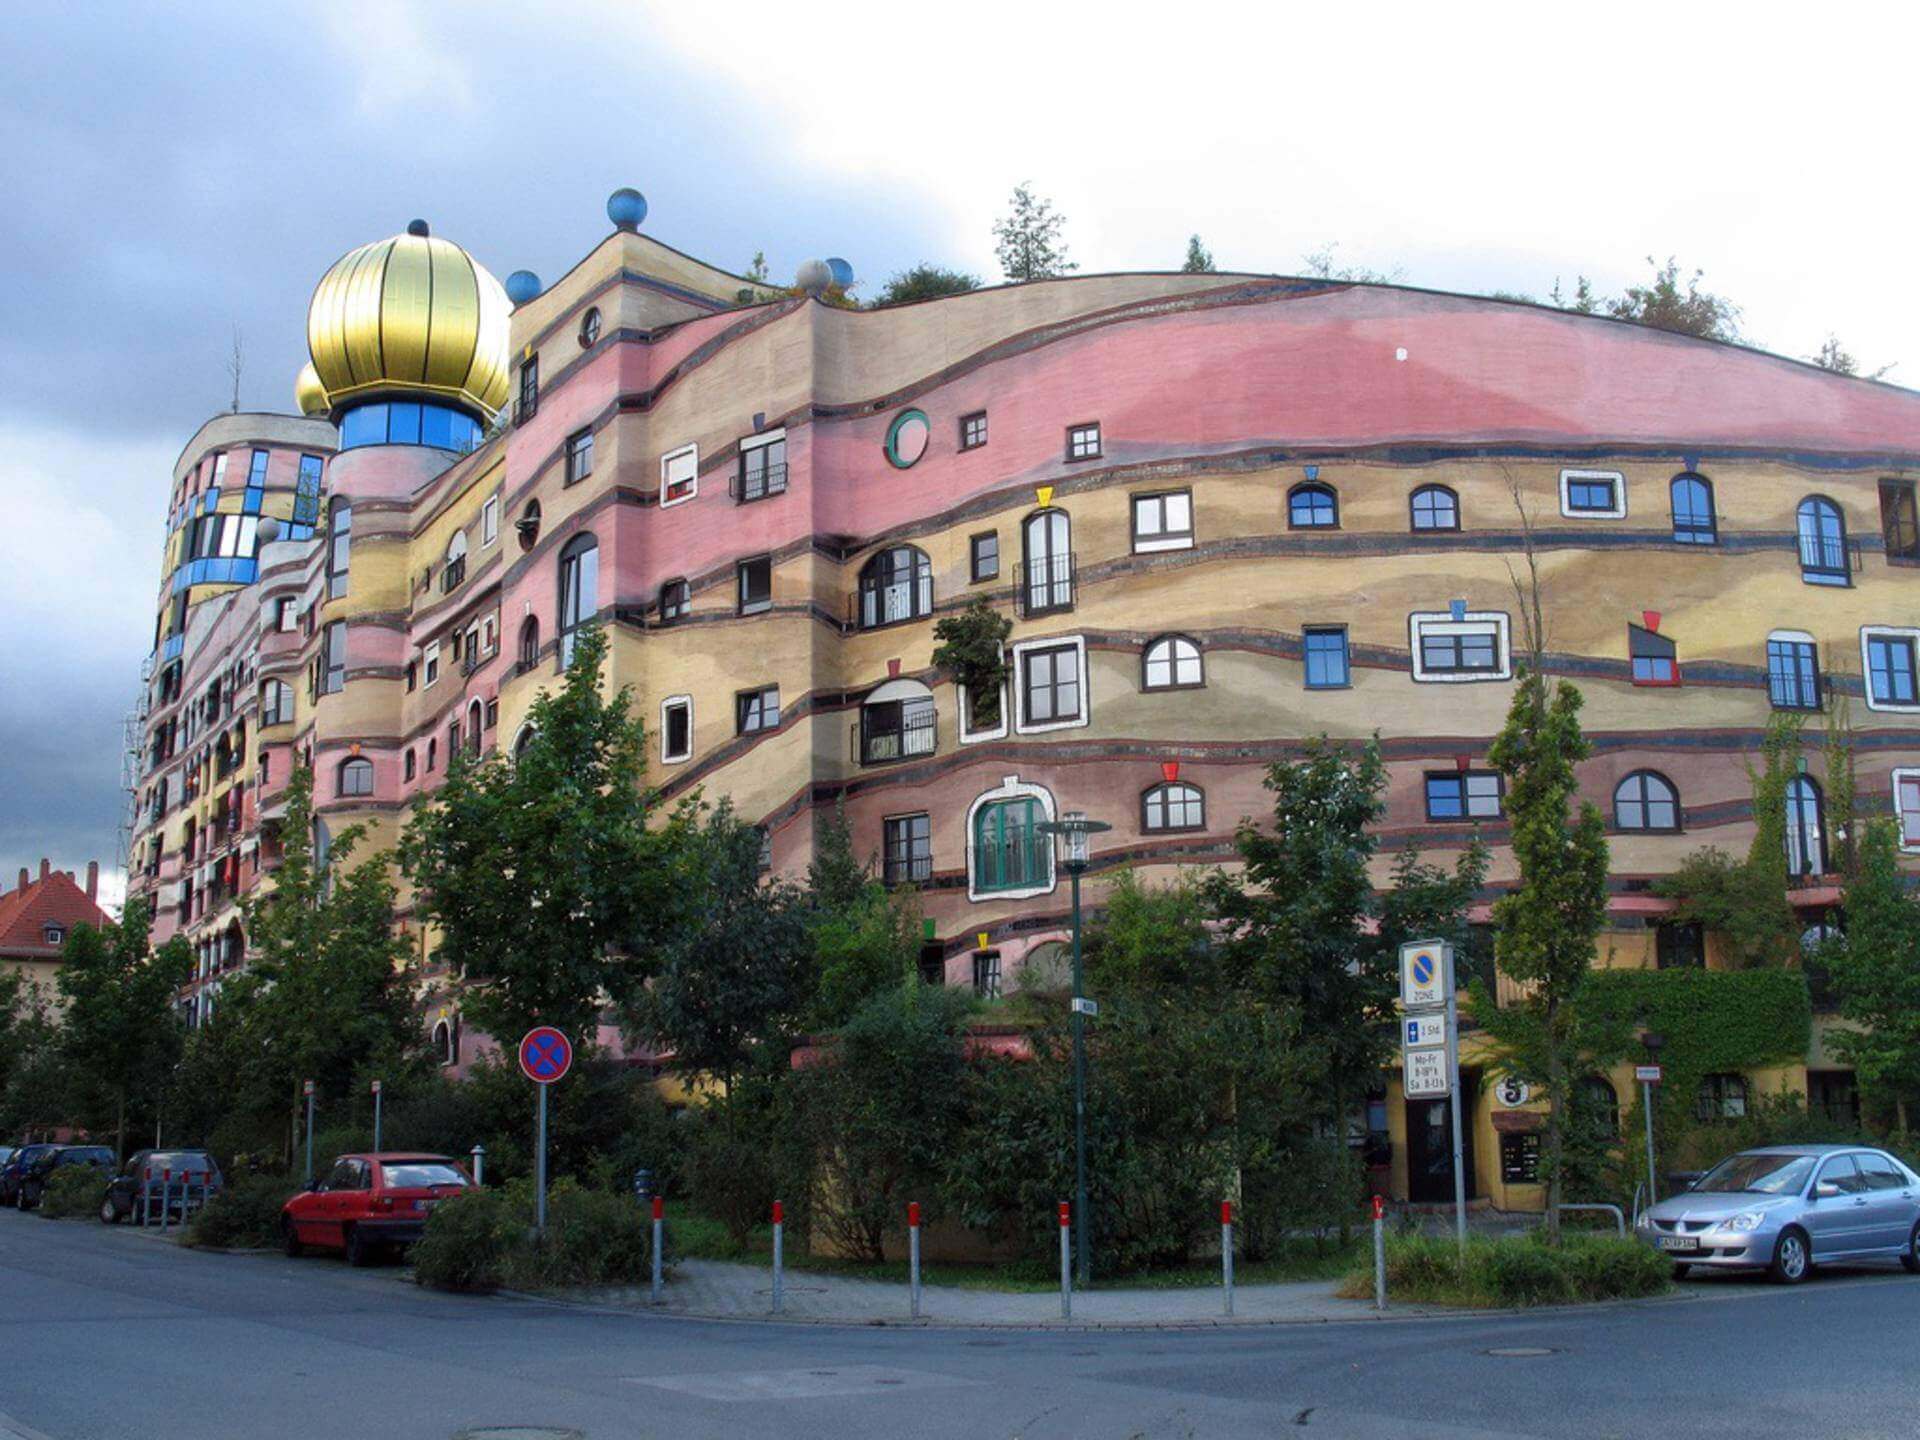 Hundertwasser Building – Germany